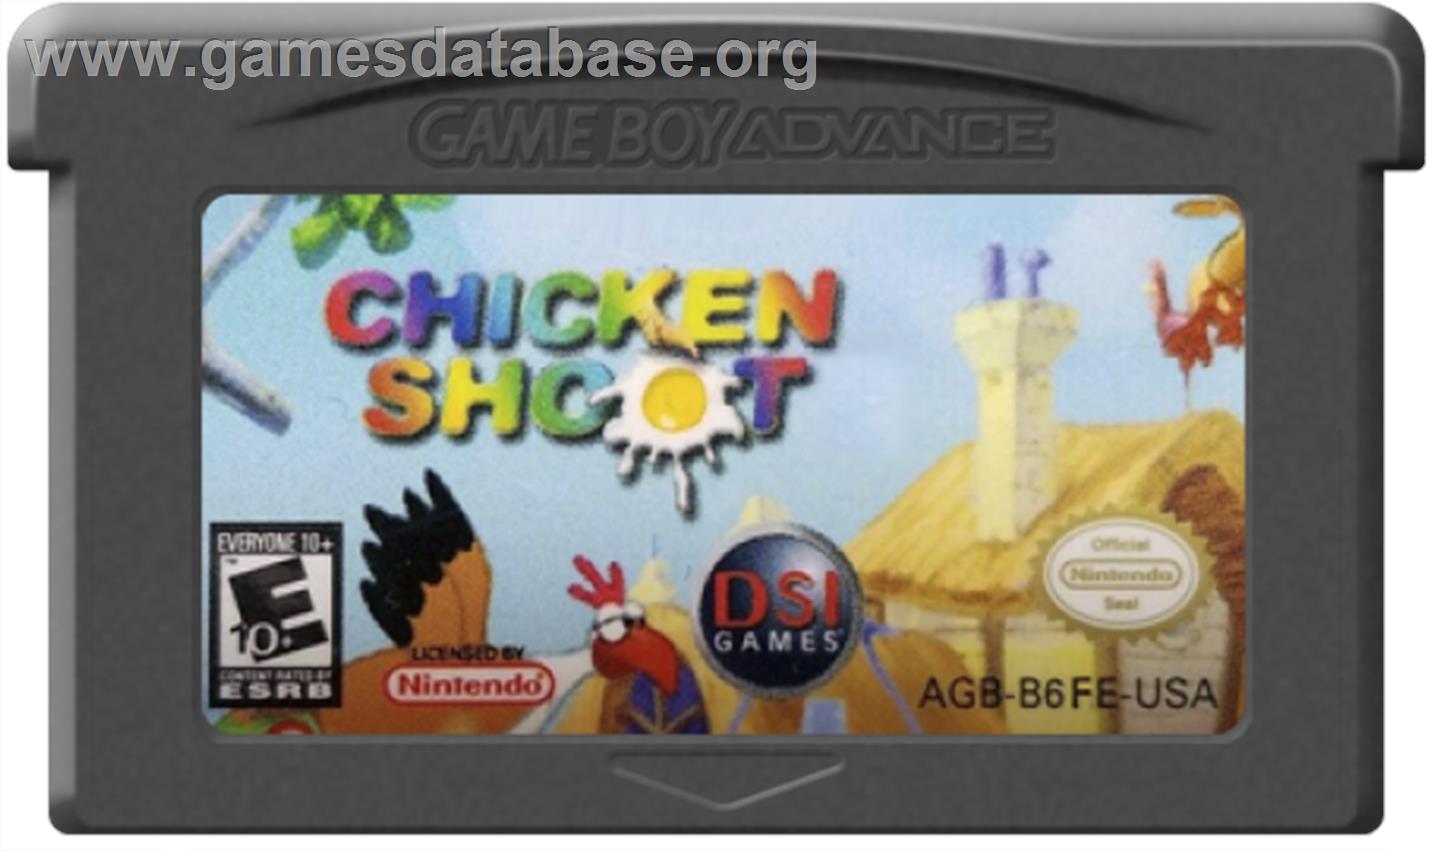 Chicken Shoot - Nintendo Game Boy Advance - Artwork - Cartridge